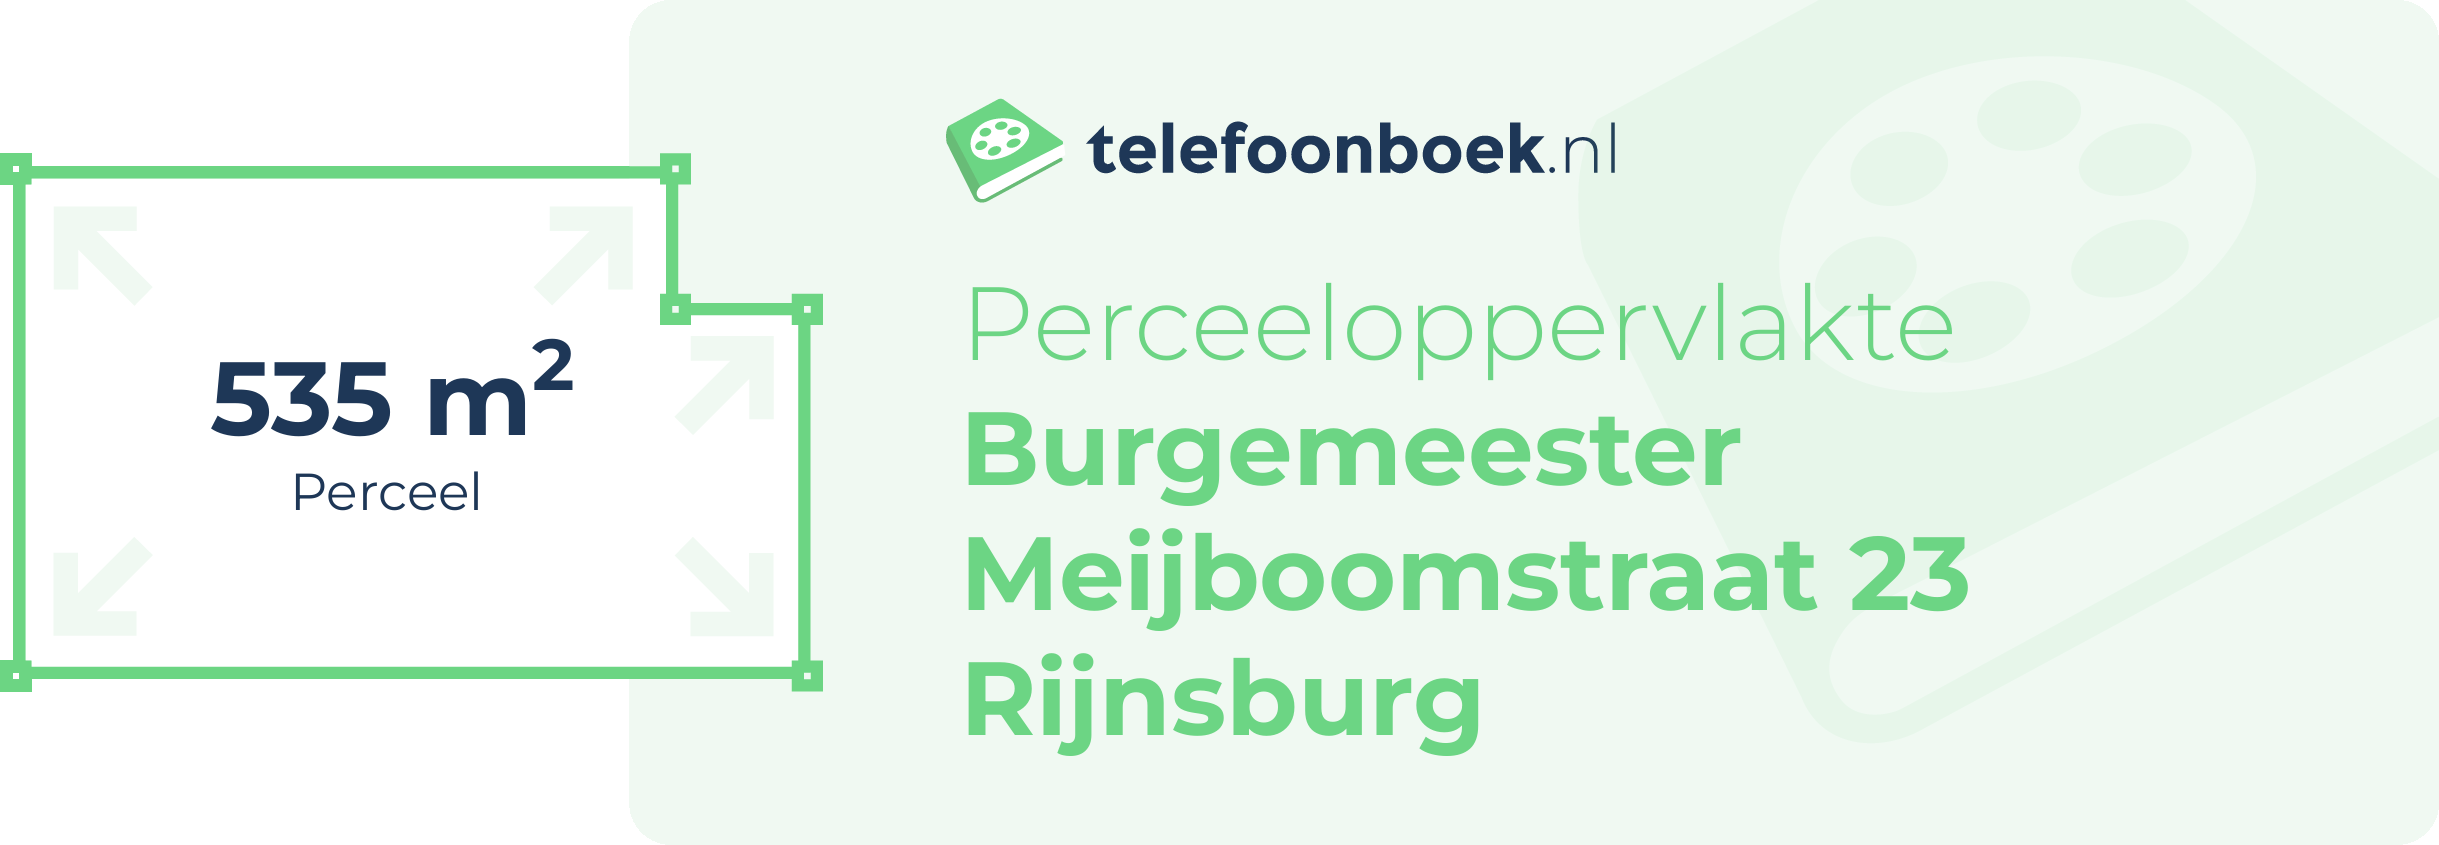 Perceeloppervlakte Burgemeester Meijboomstraat 23 Rijnsburg